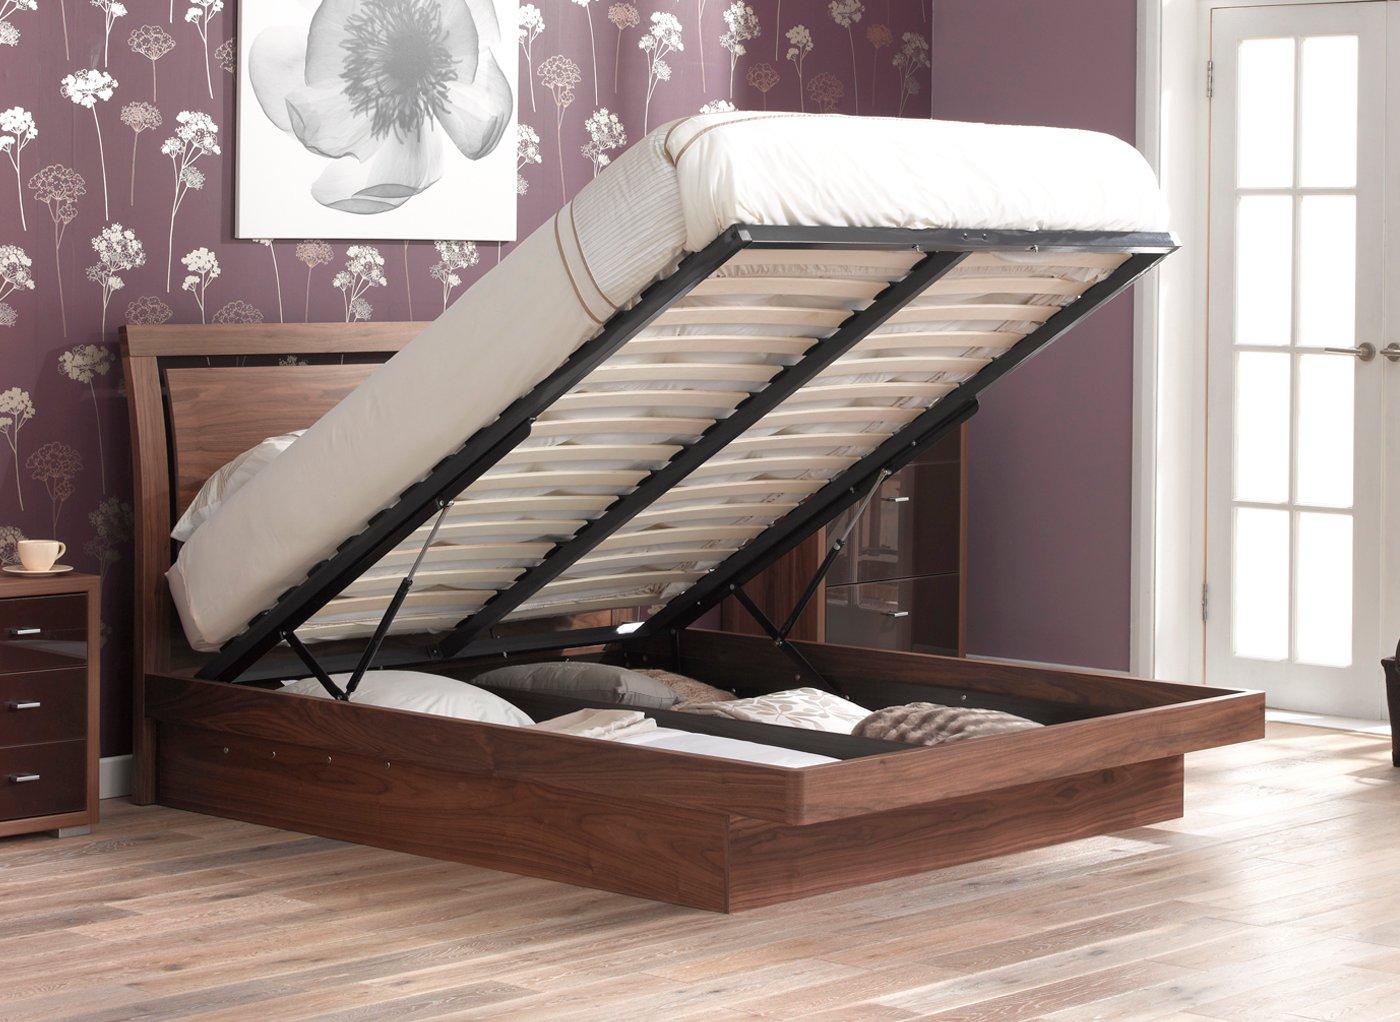 ottoman beds with mattress uk